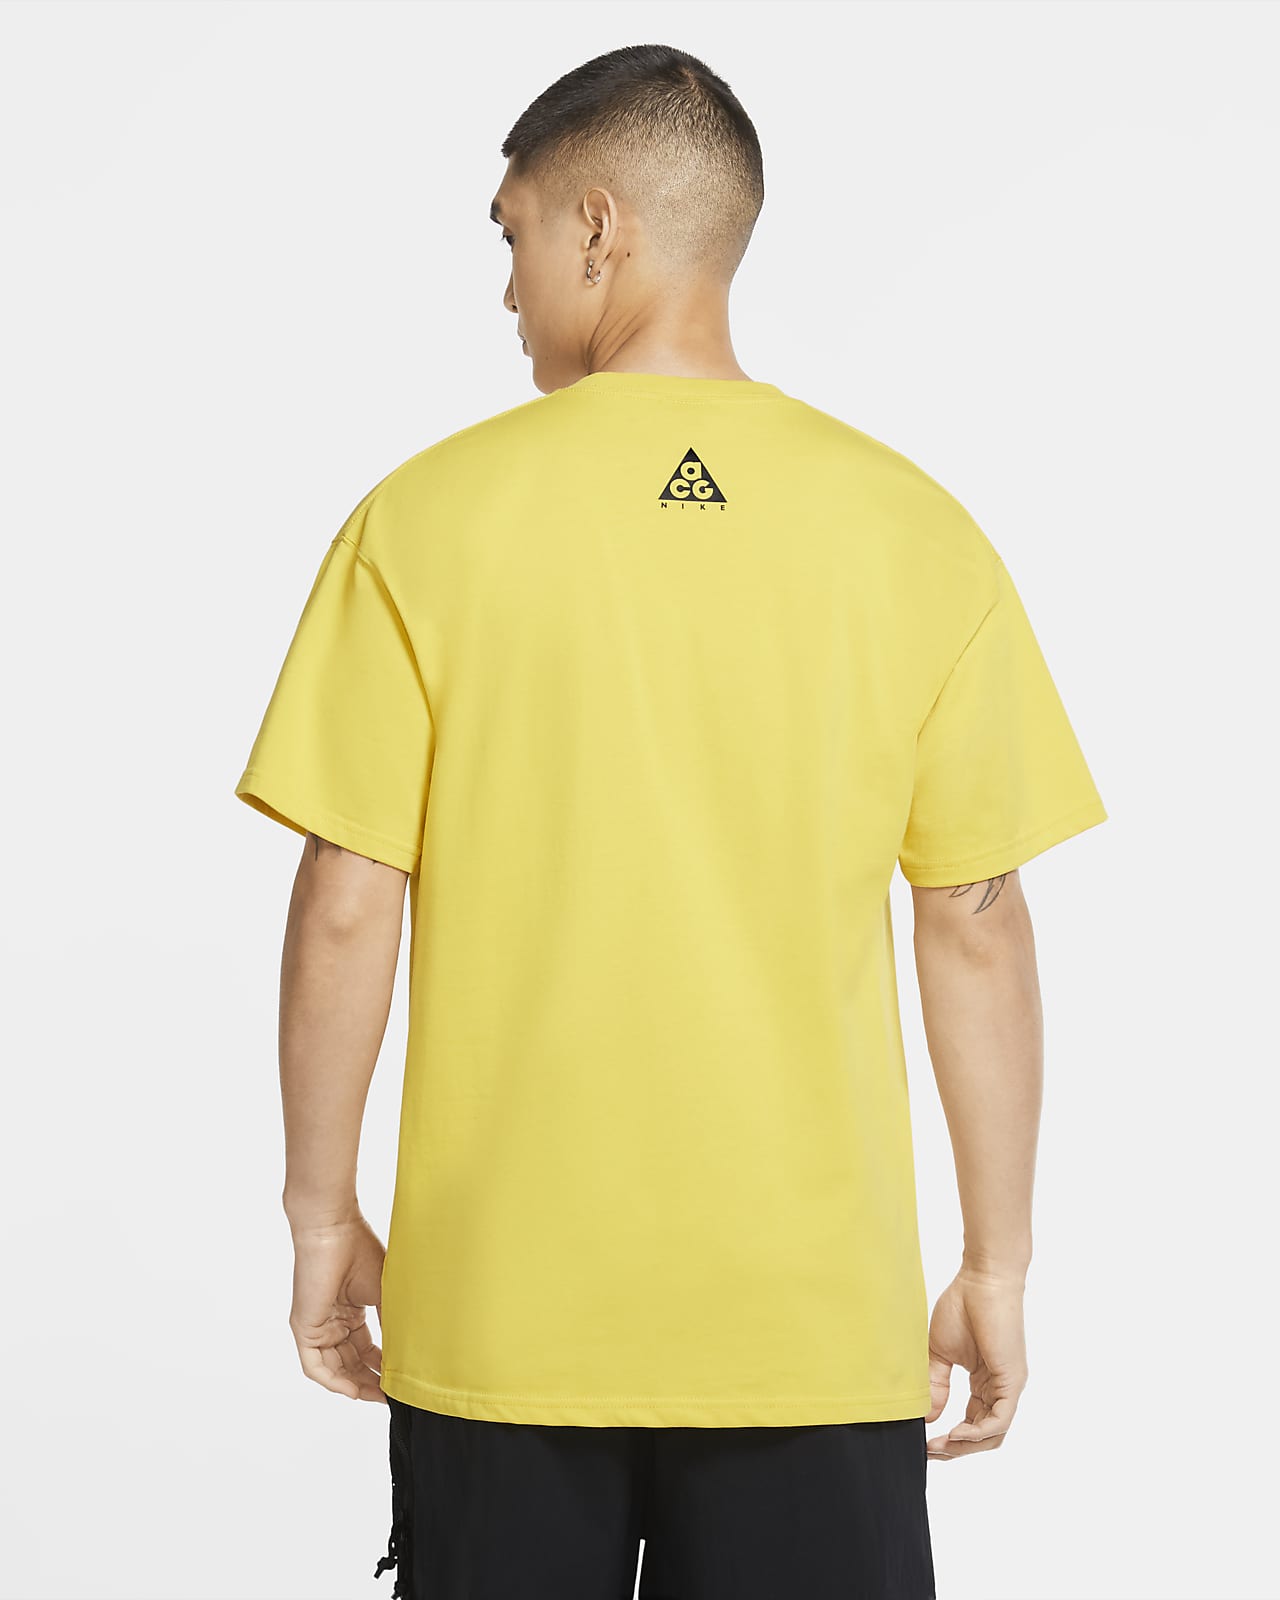 nike acg t shirt yellow